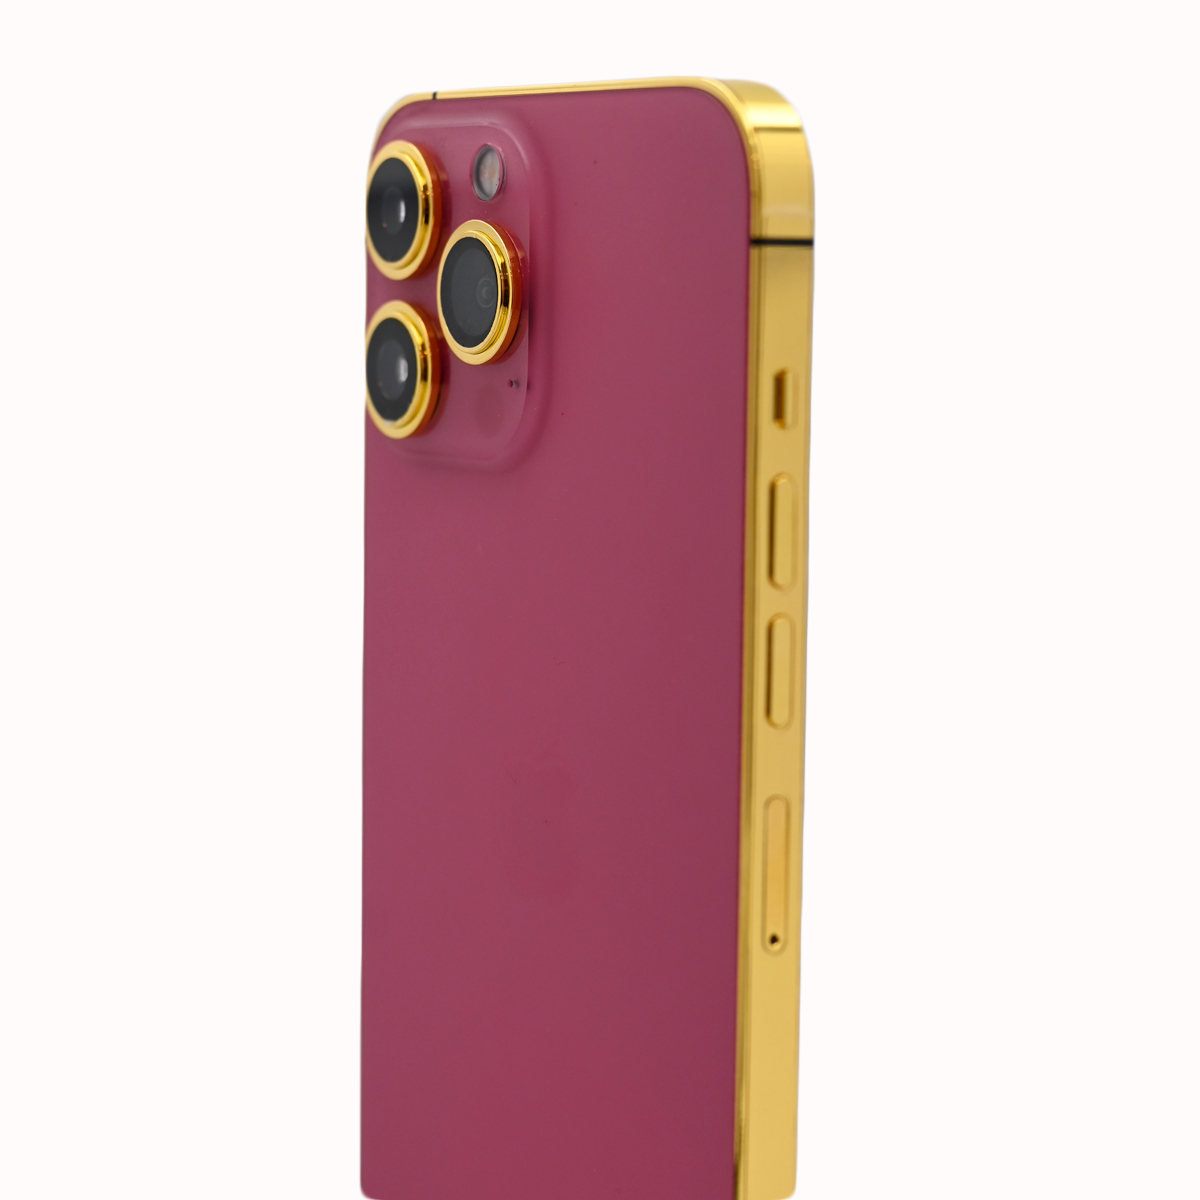 Caviar Luxury 24k Gold Frame Customized iPhone Pro 128 GB Pink